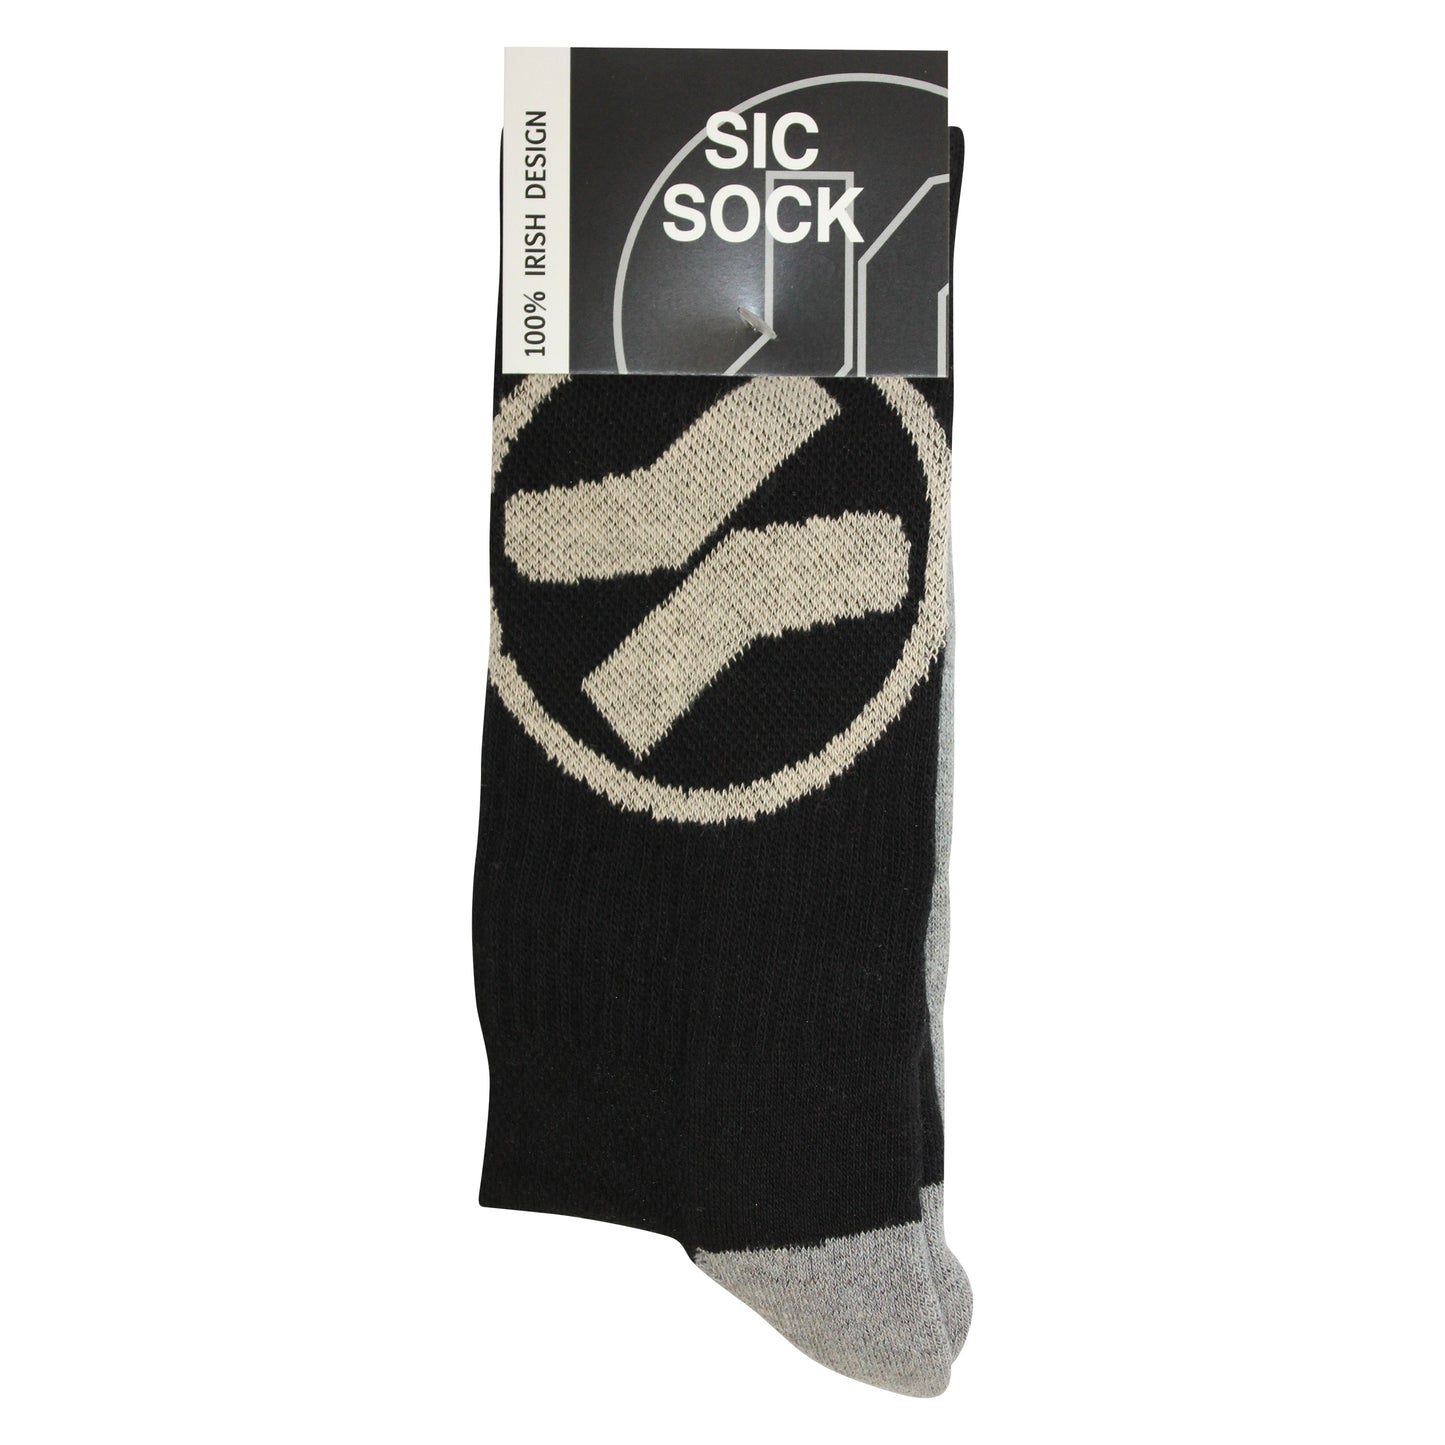 Sicsock - Everyday Max Cushion Crew Socks Black/Beige